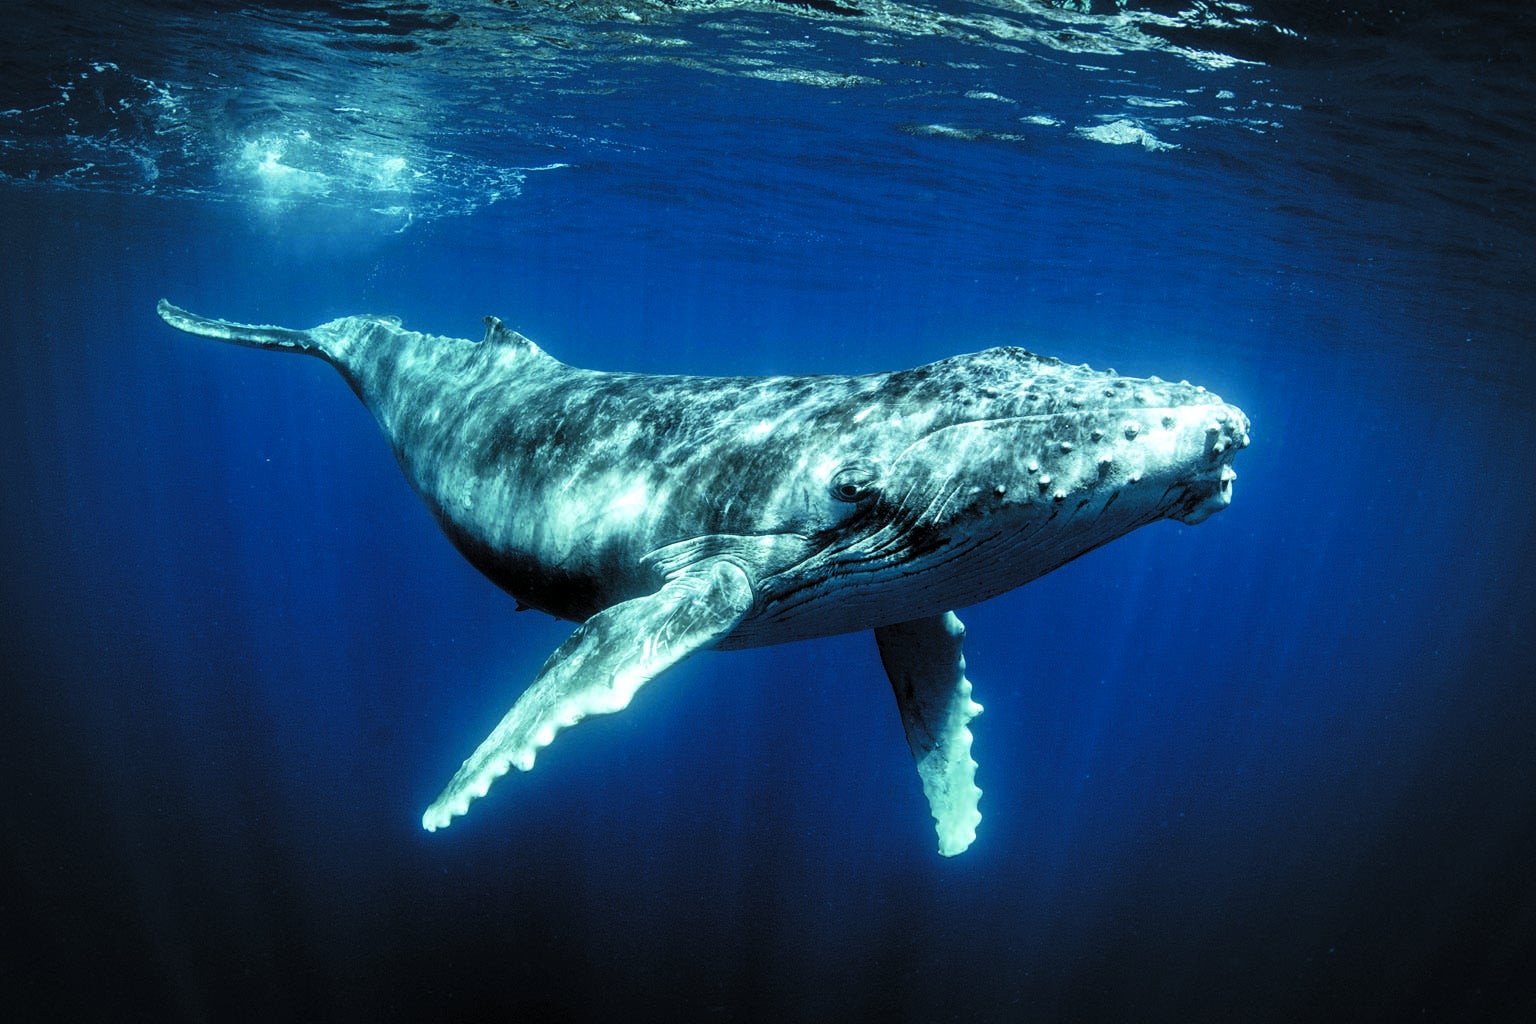 Giant humpback whale